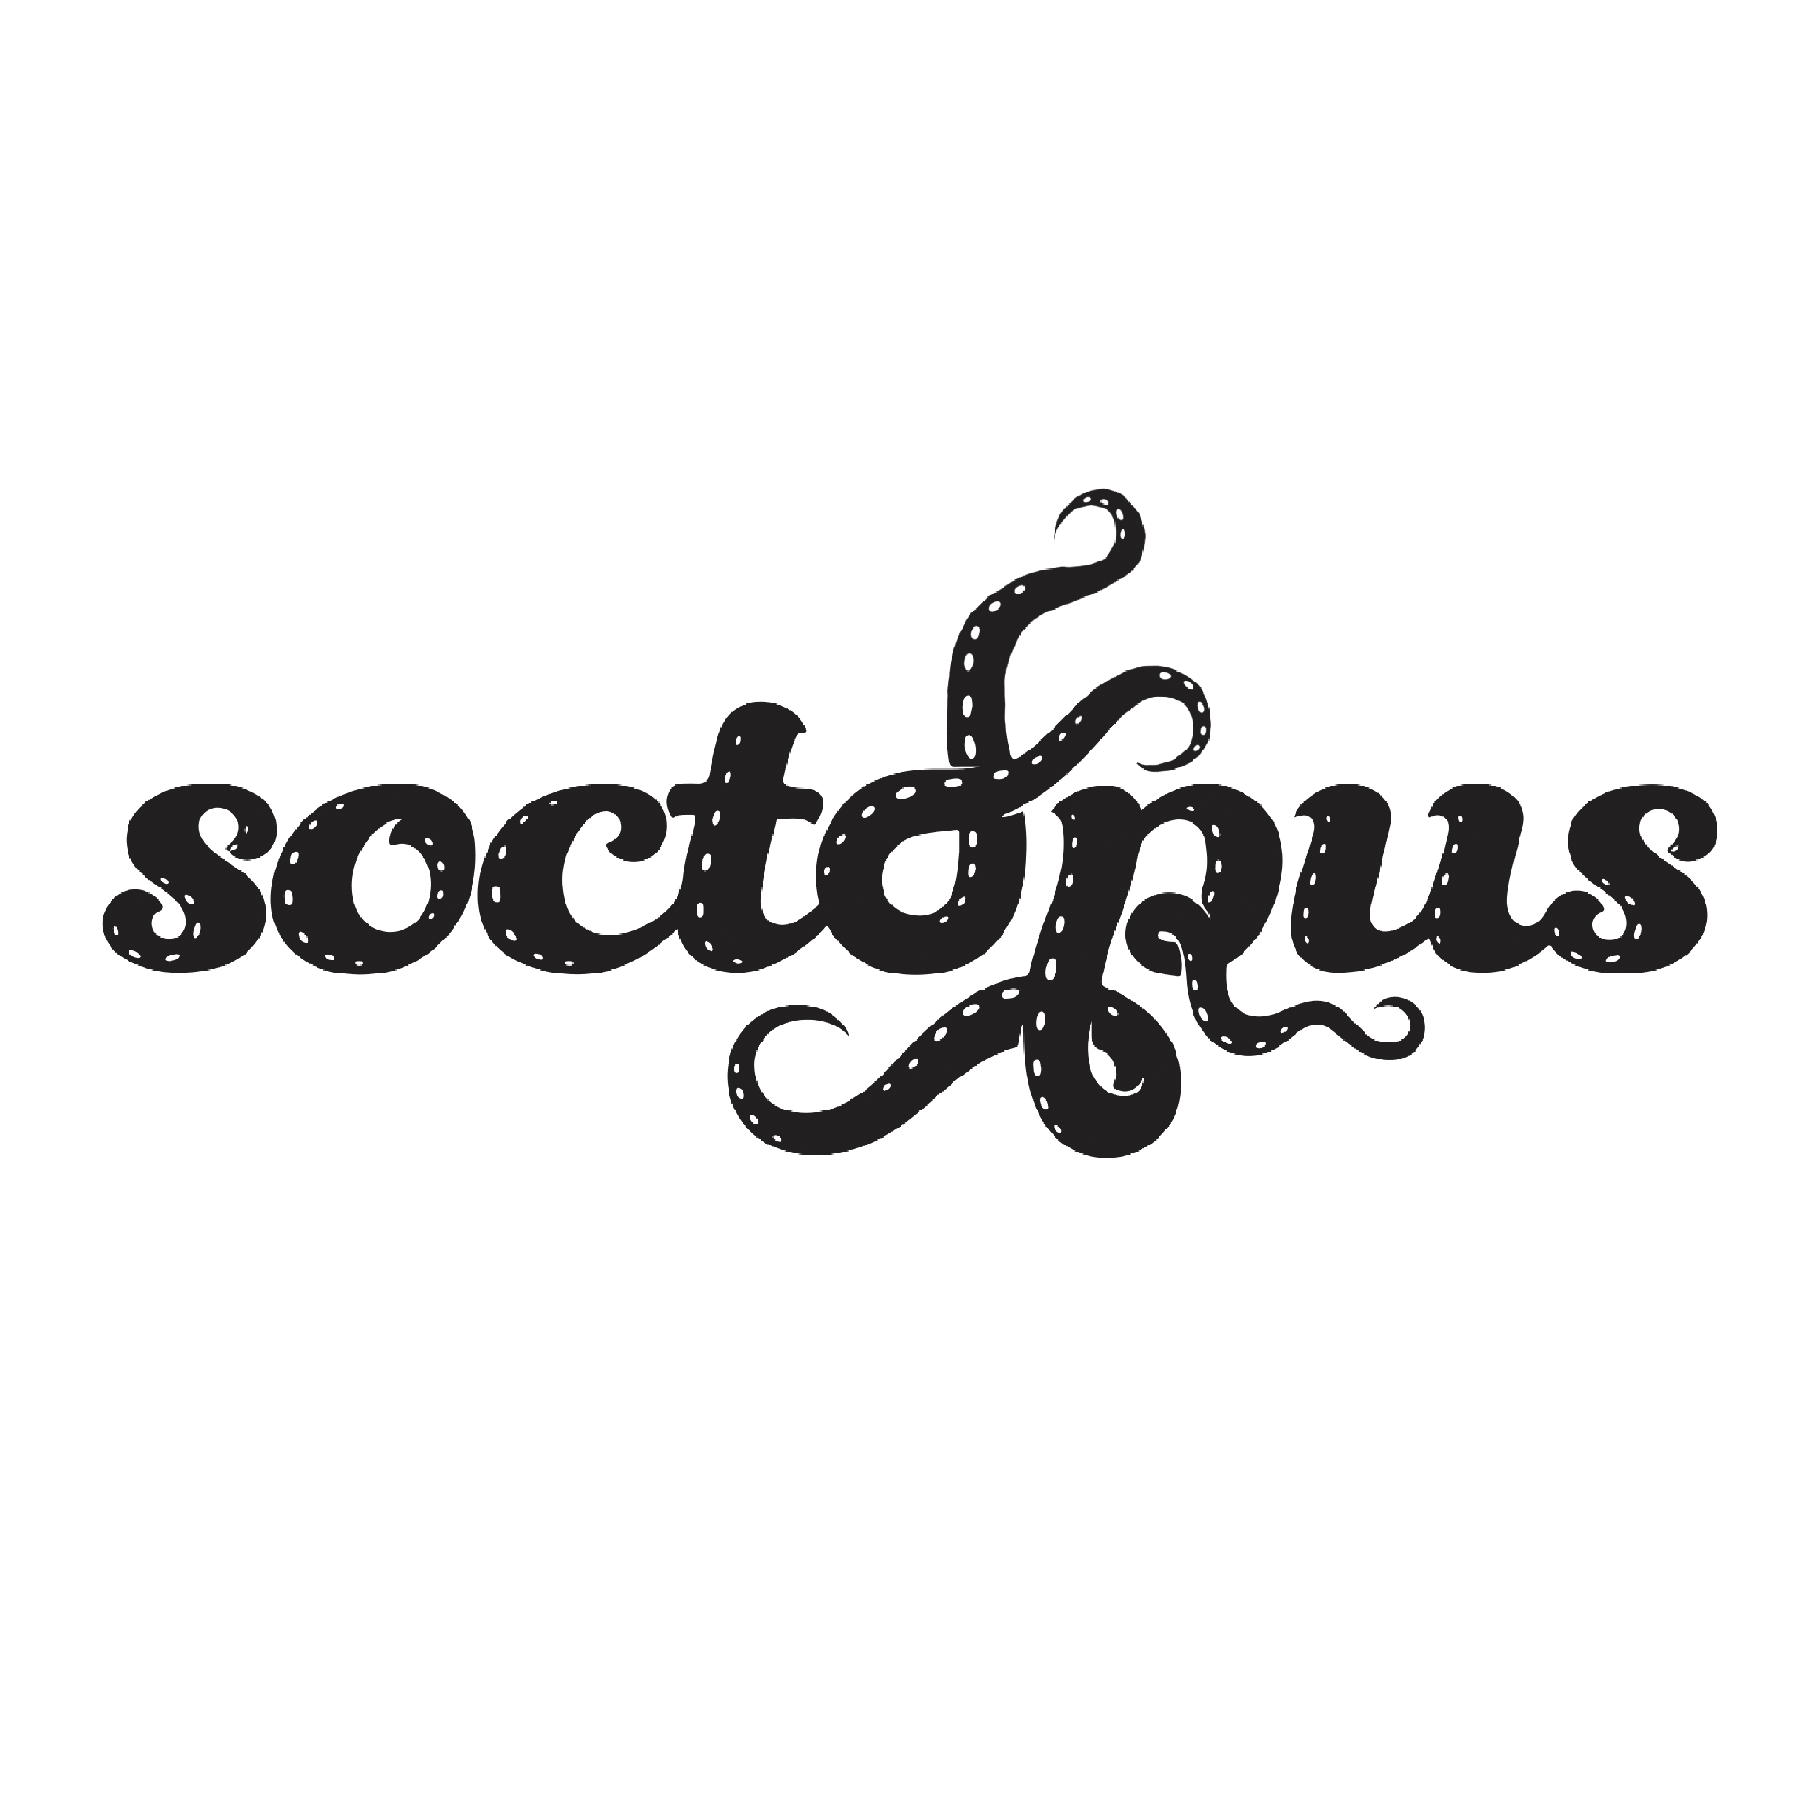 Soctopus Ltd